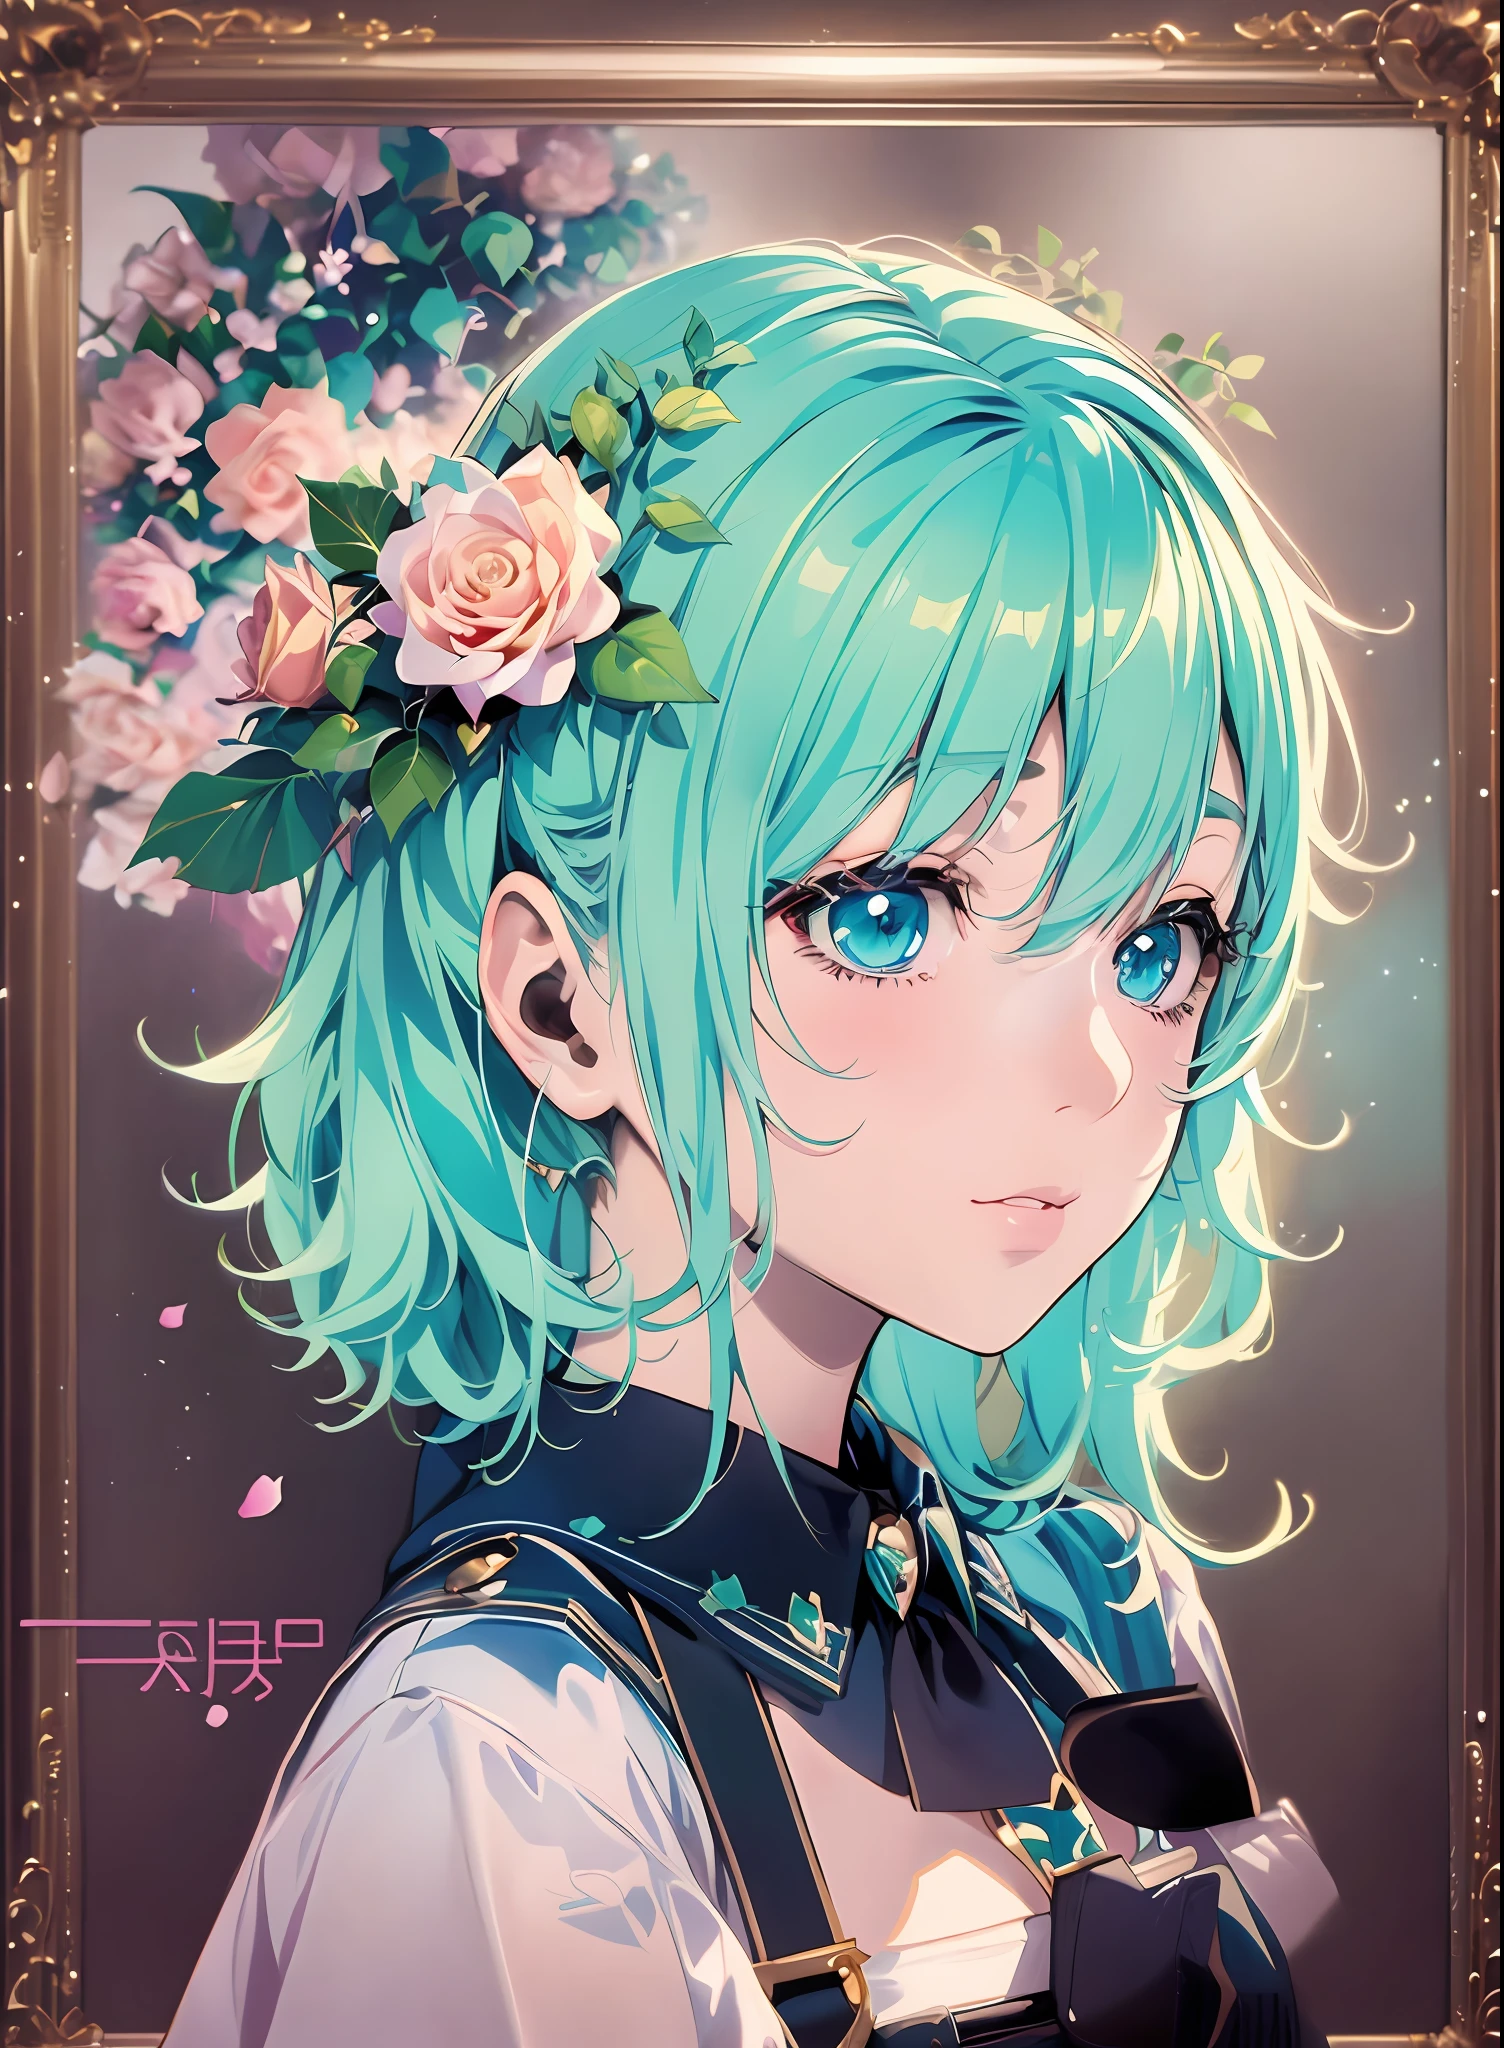 Konmutsuki_gacha_series1, punk_rosette, cute girl, aqua color flowers, full body, elegant flowers background、Highly detailed eye detail、Highly detailed painting style portrait detail